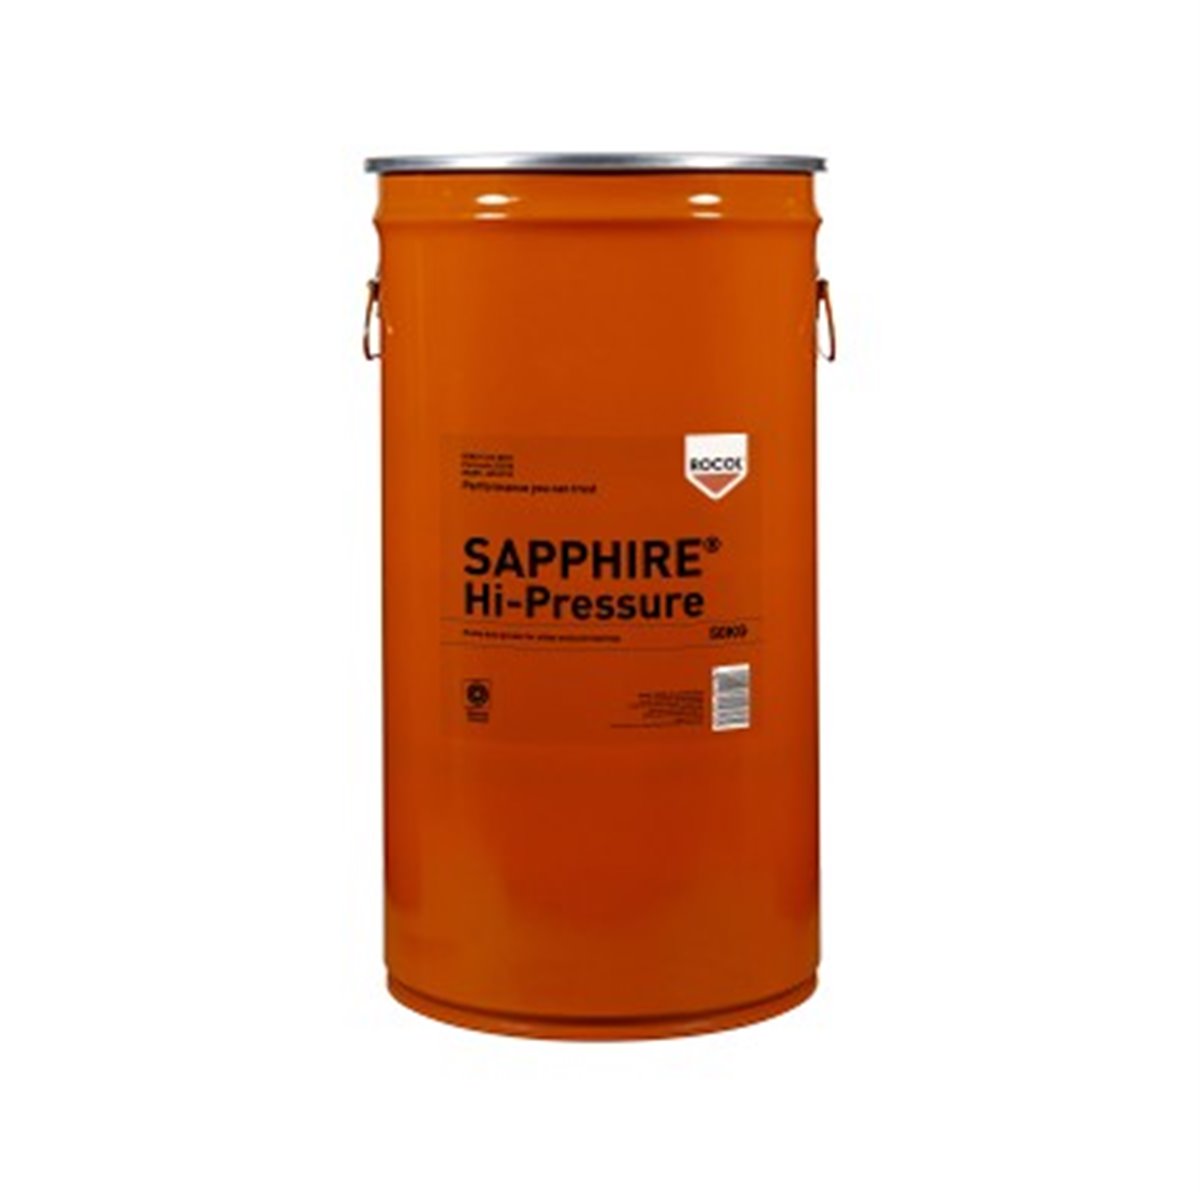 SAPPHIRE Hi-Pressure Rocol 50kg RS12018